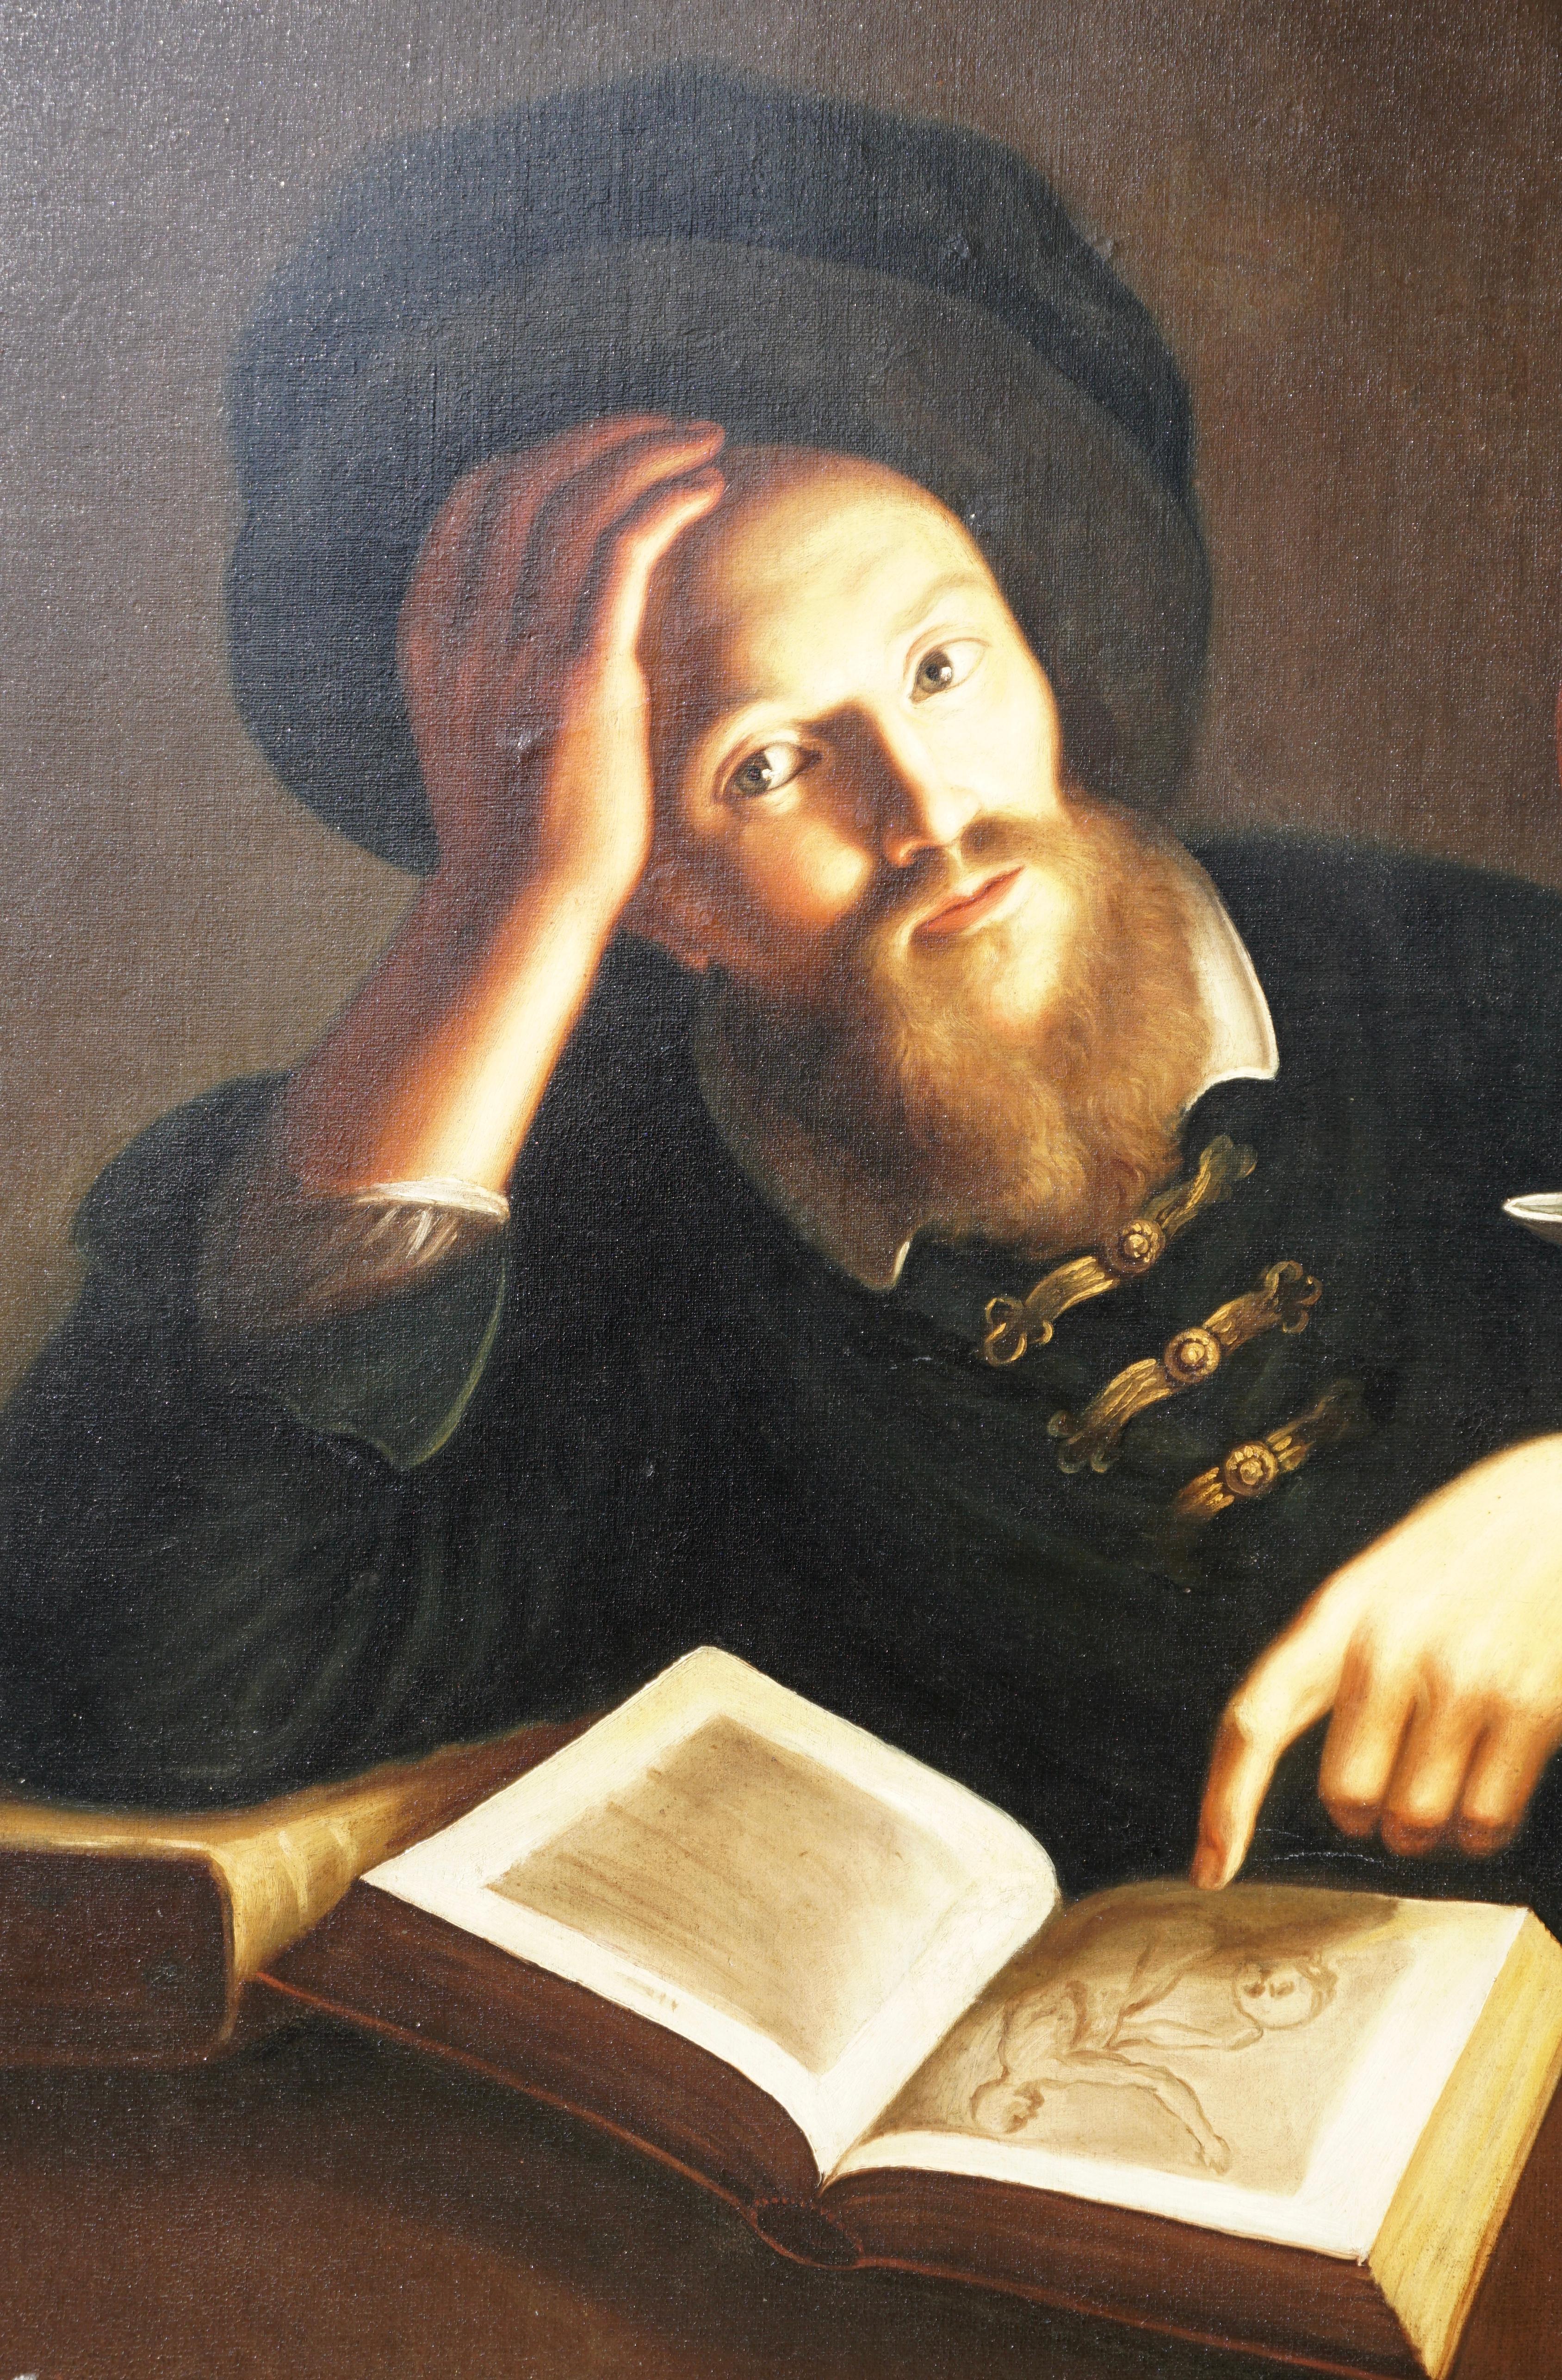 17th century self portraits